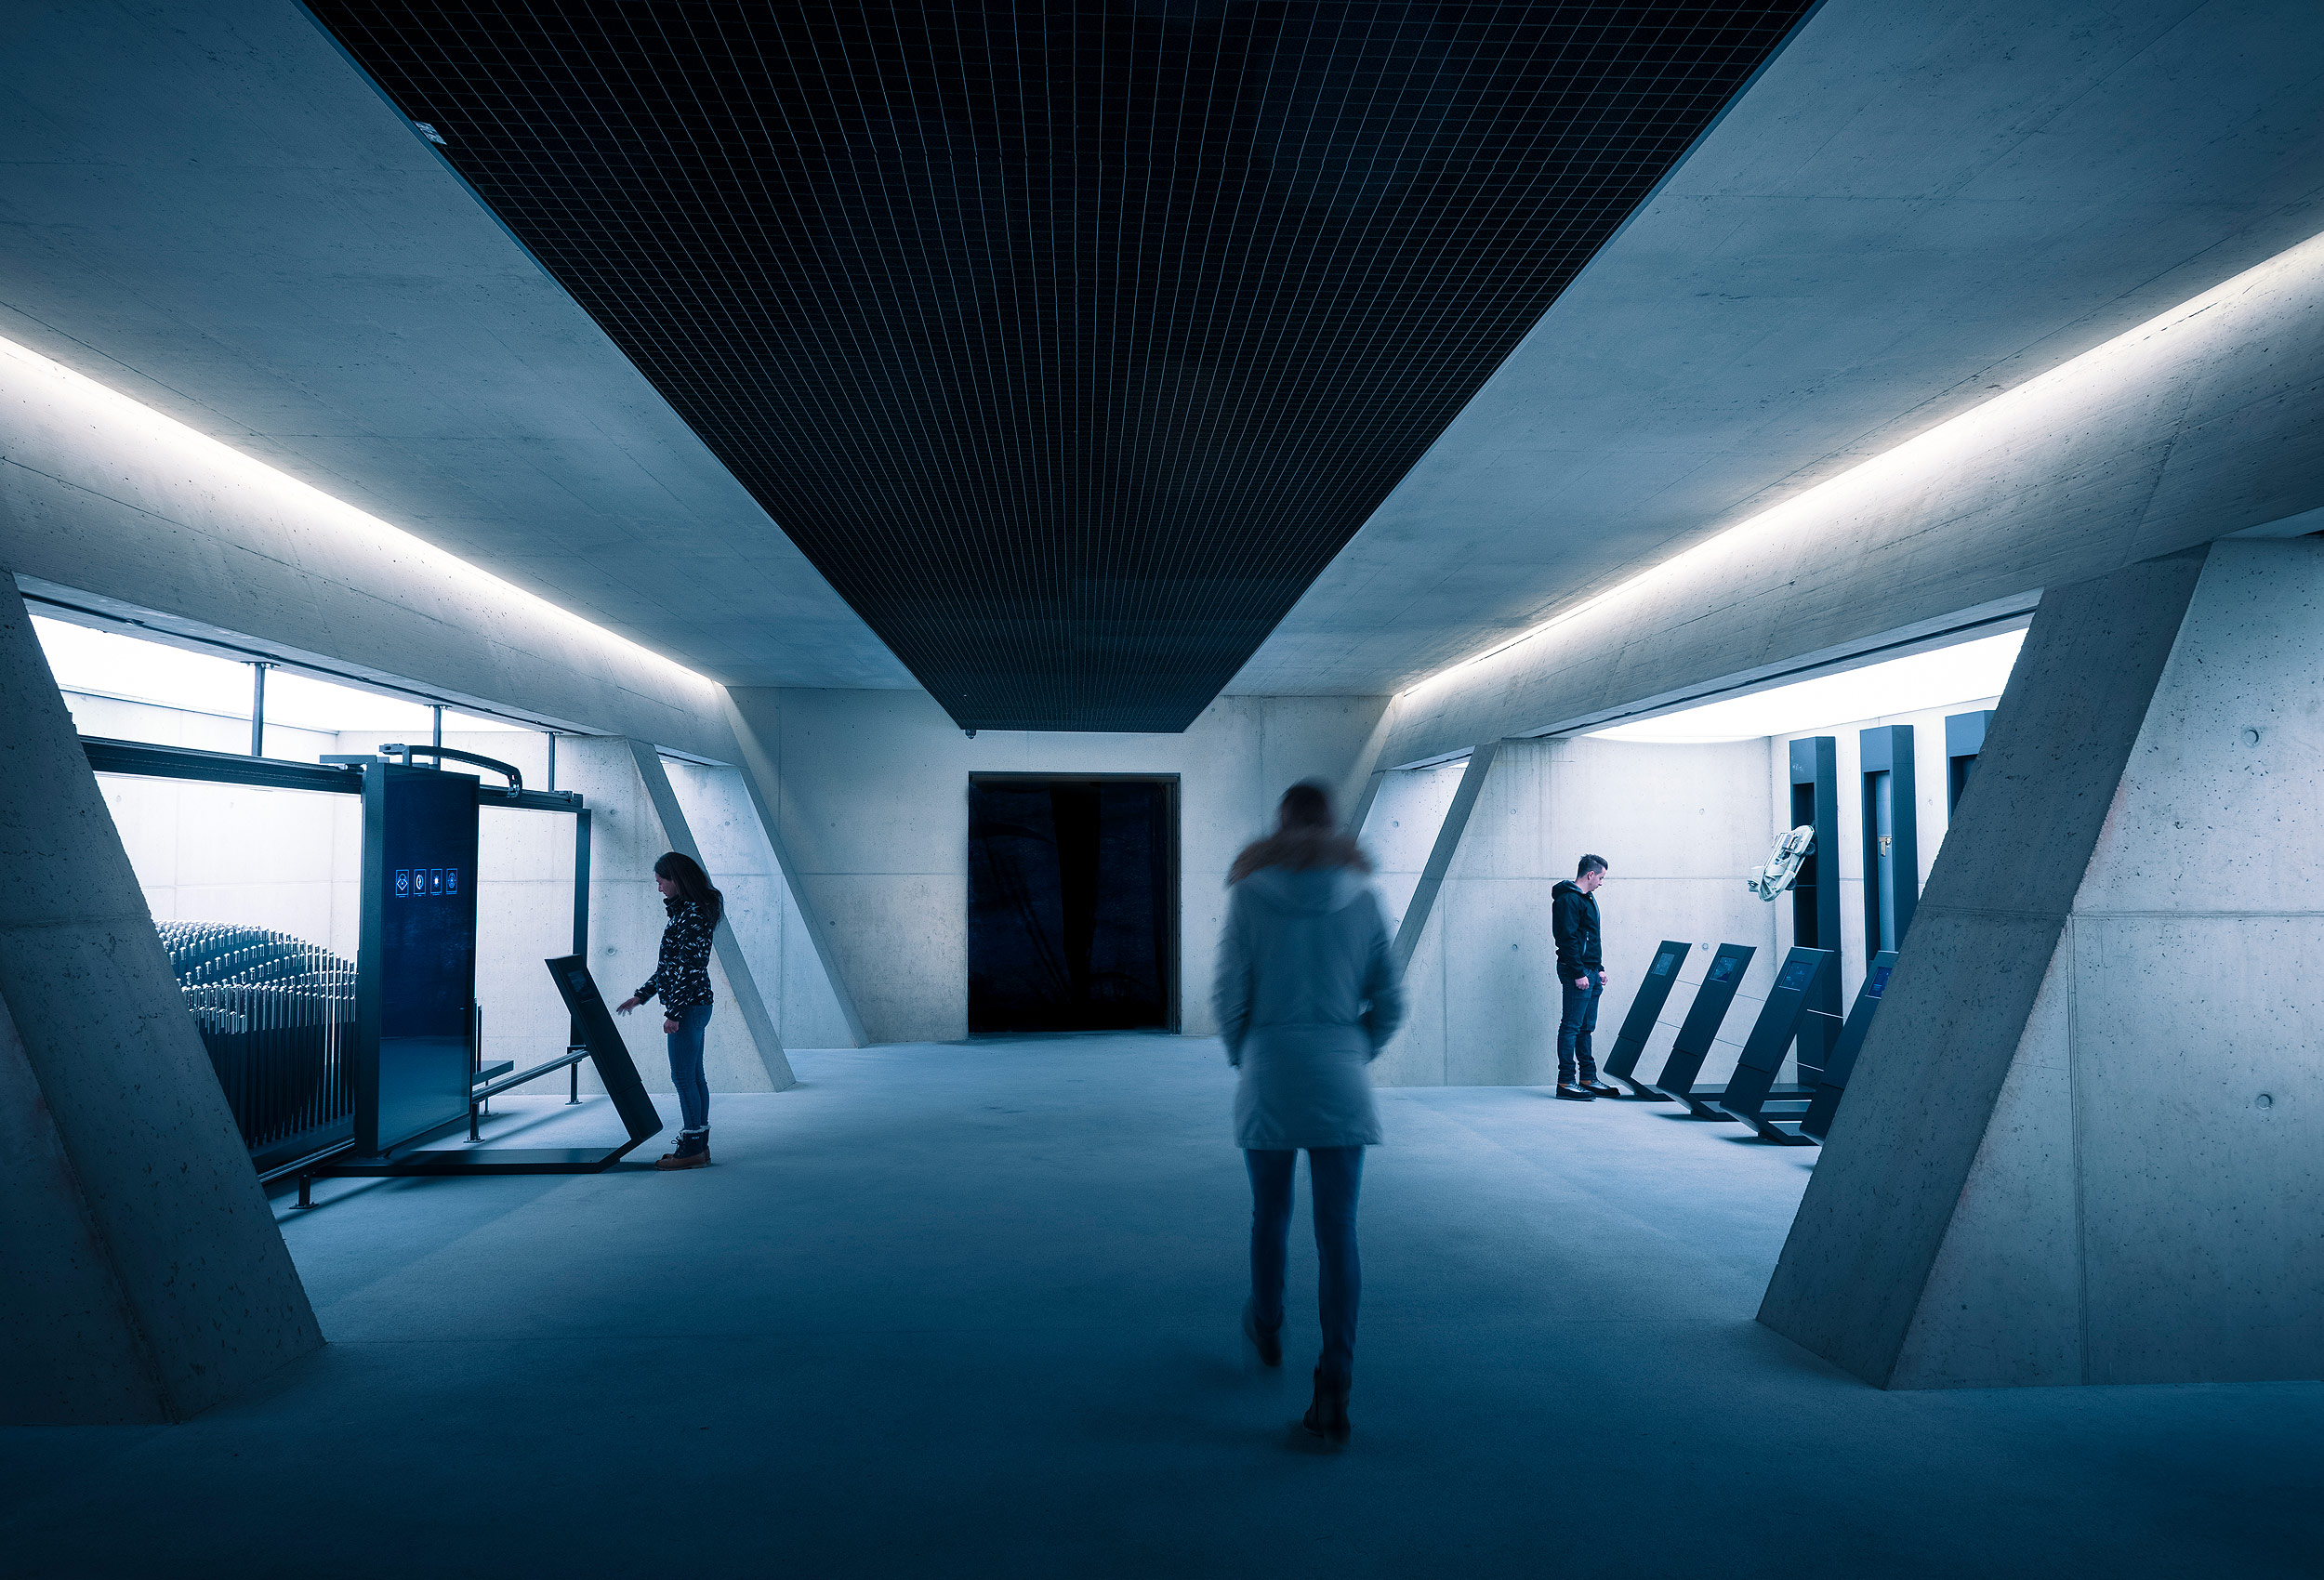 James Bond Museum by architectural photographer Kristopher Grunert